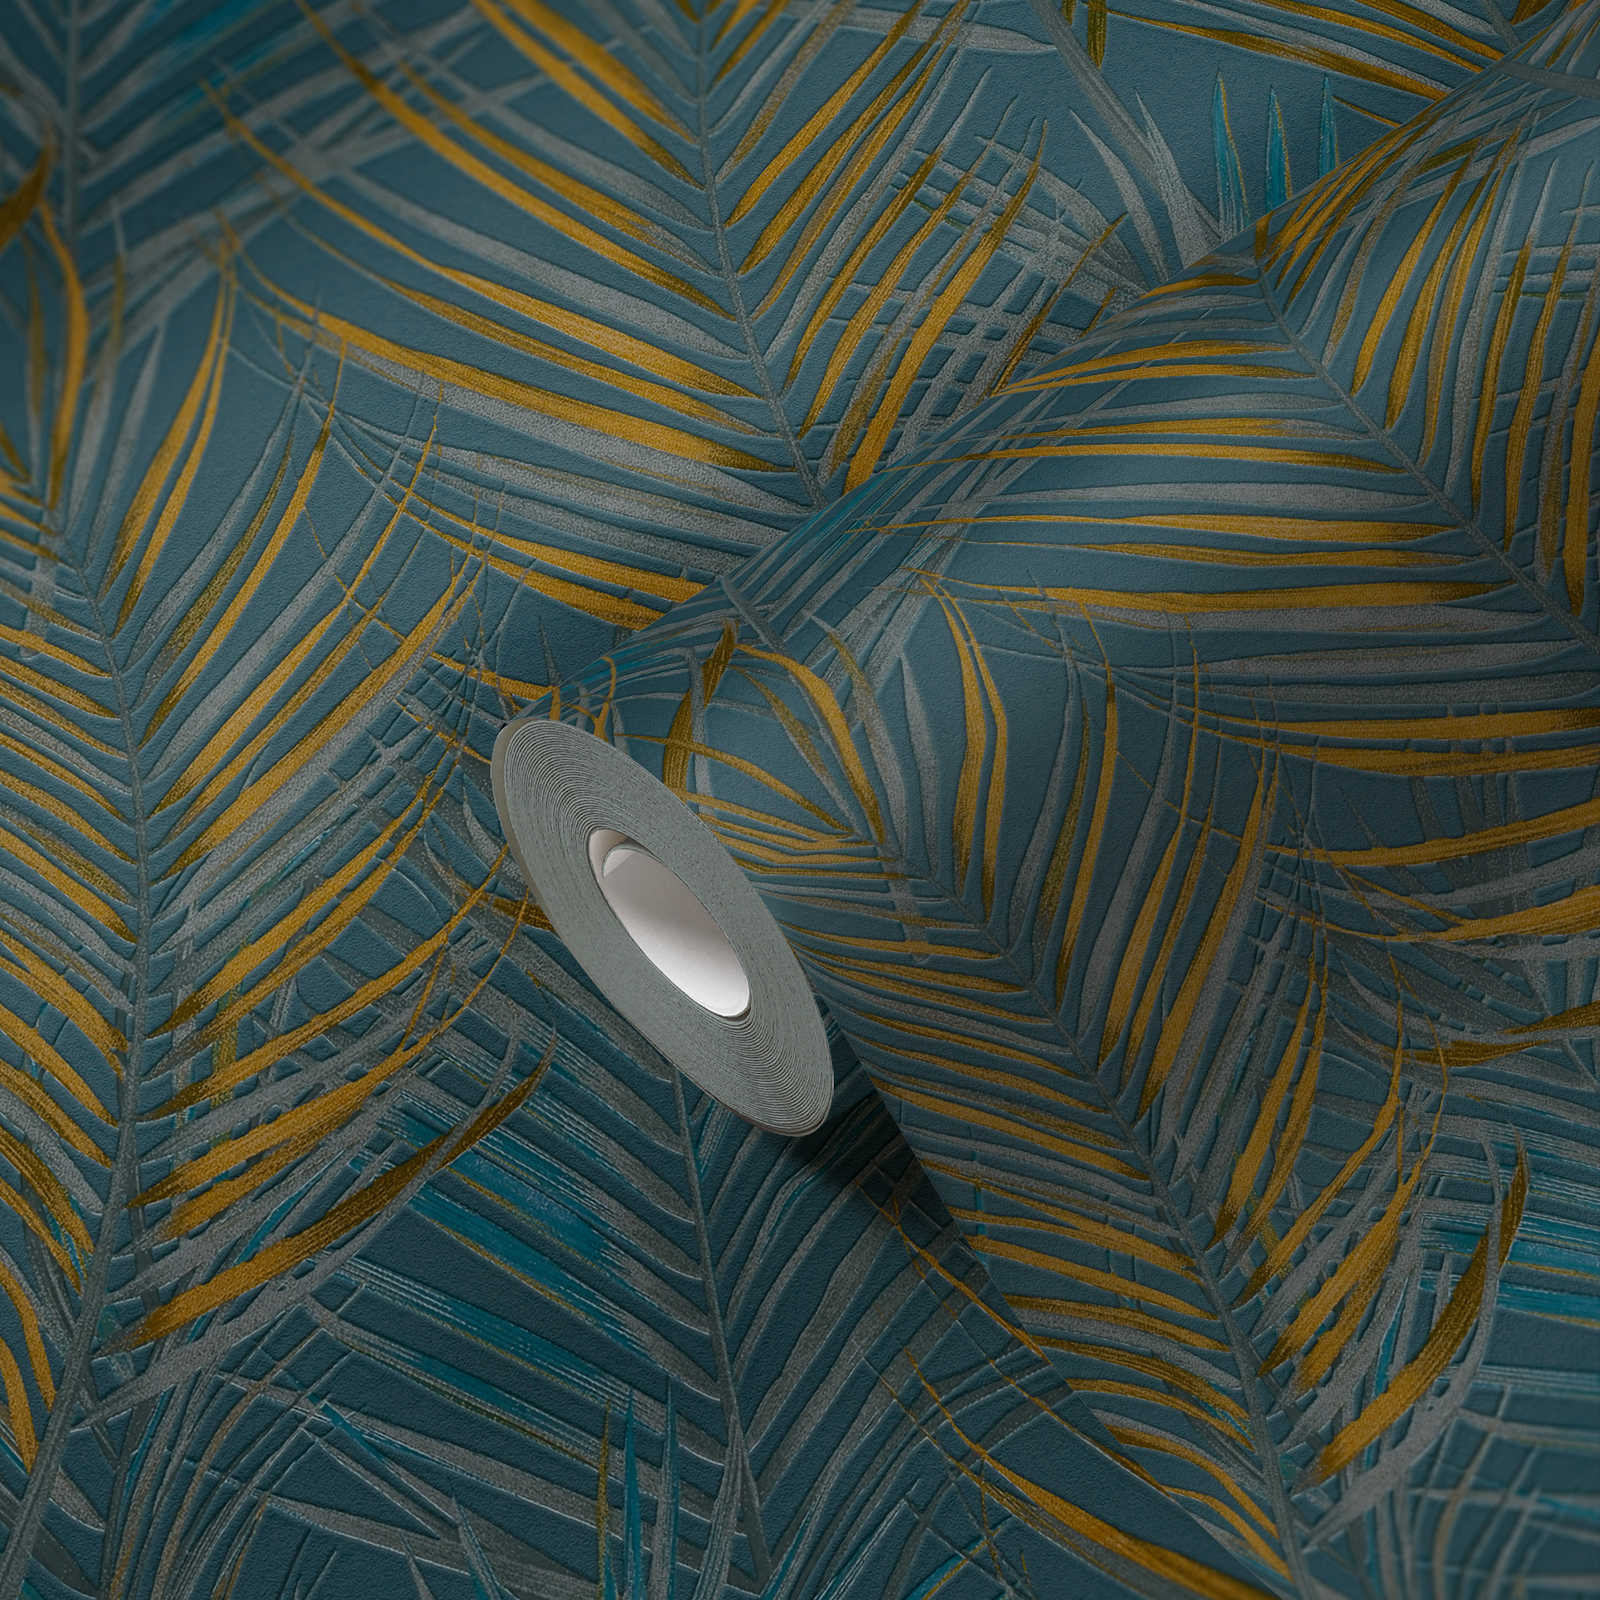             Tapete Dschungel Muster mit Palmenblättern – Blau, Gelb, Petrol
        